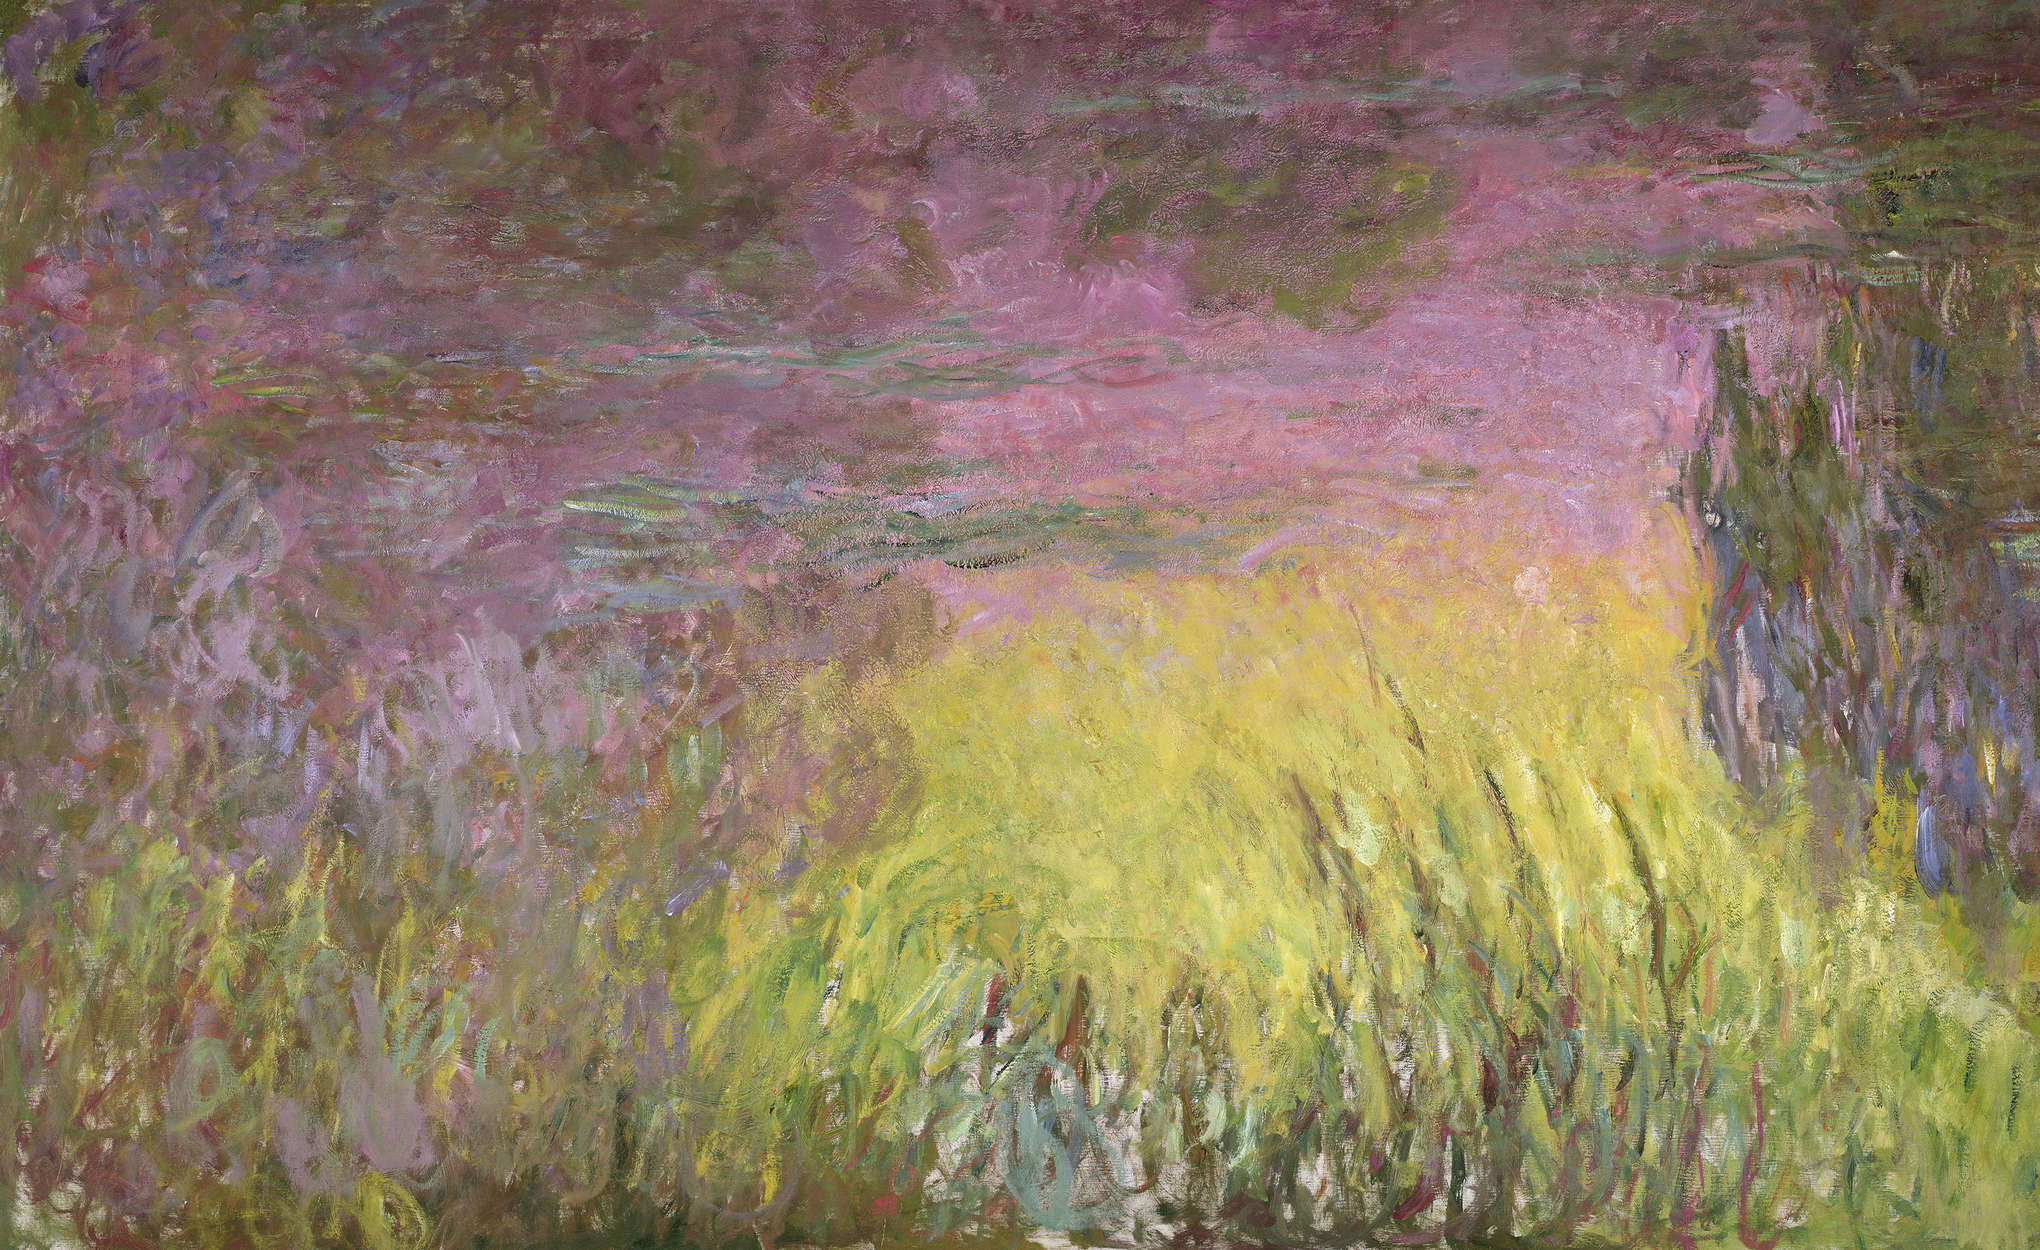             Ninfee al tramonto", murale di Claude Monet
        